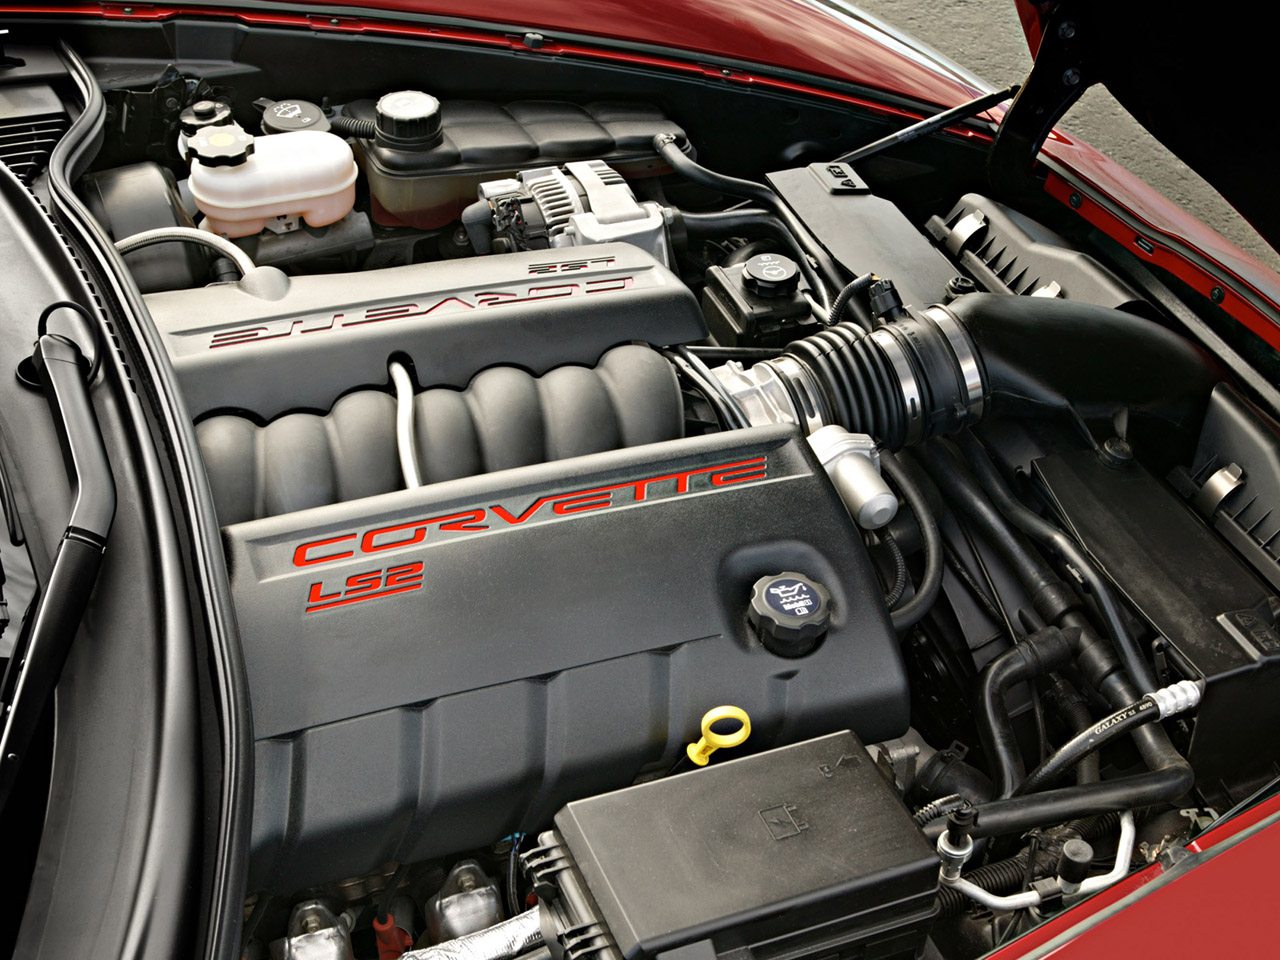 2005 Corvette Engine